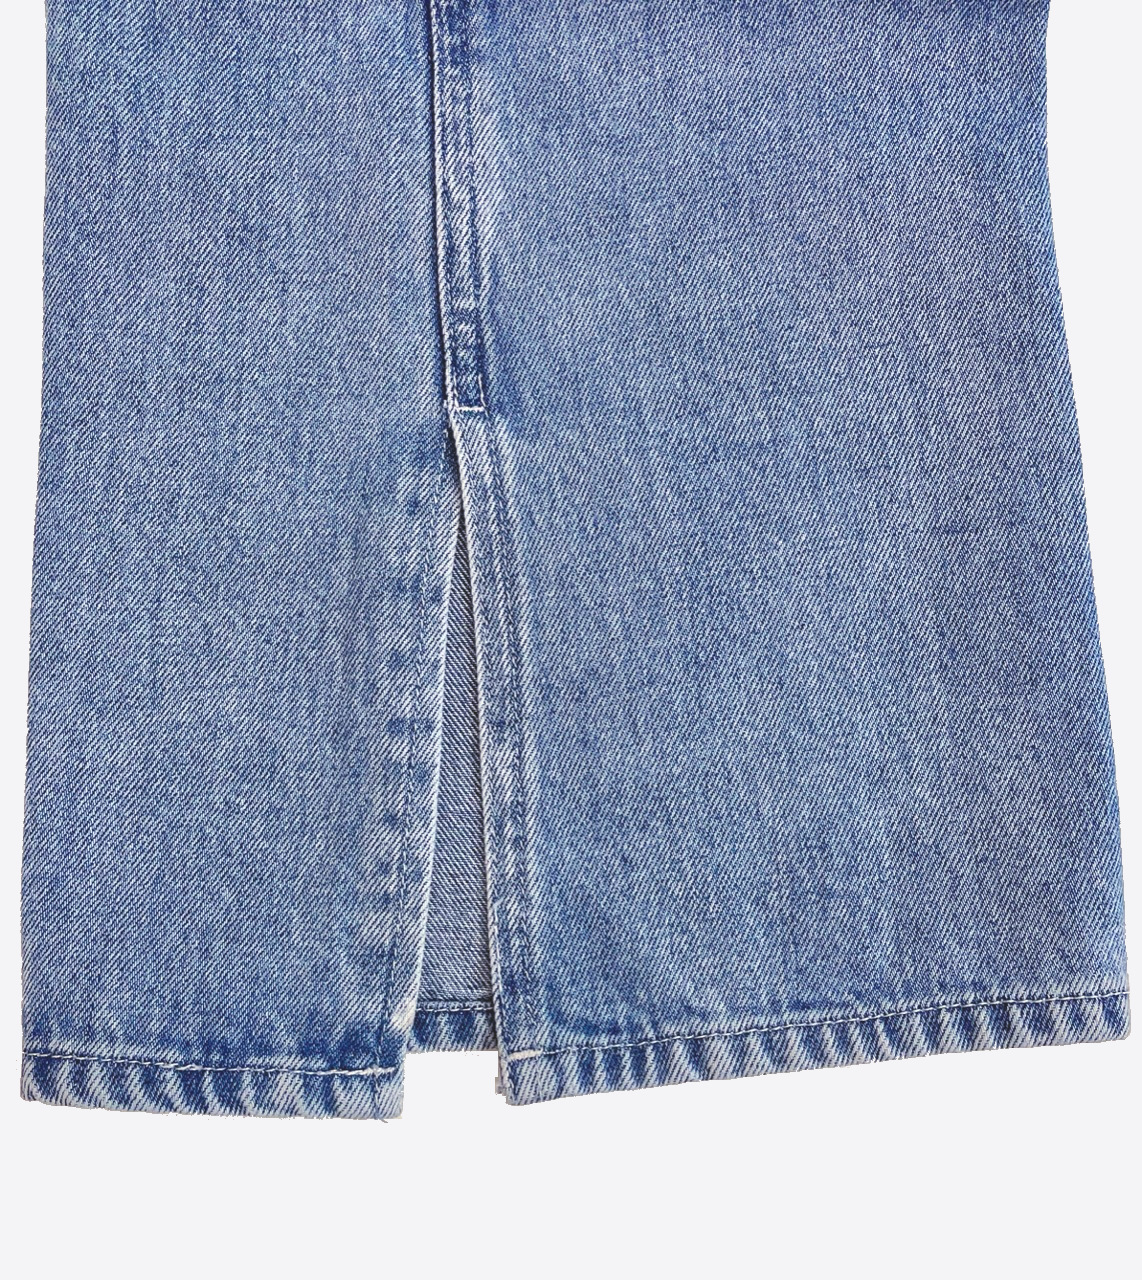 Jeans DEW Flared Non-Stretch Slit Light Blue